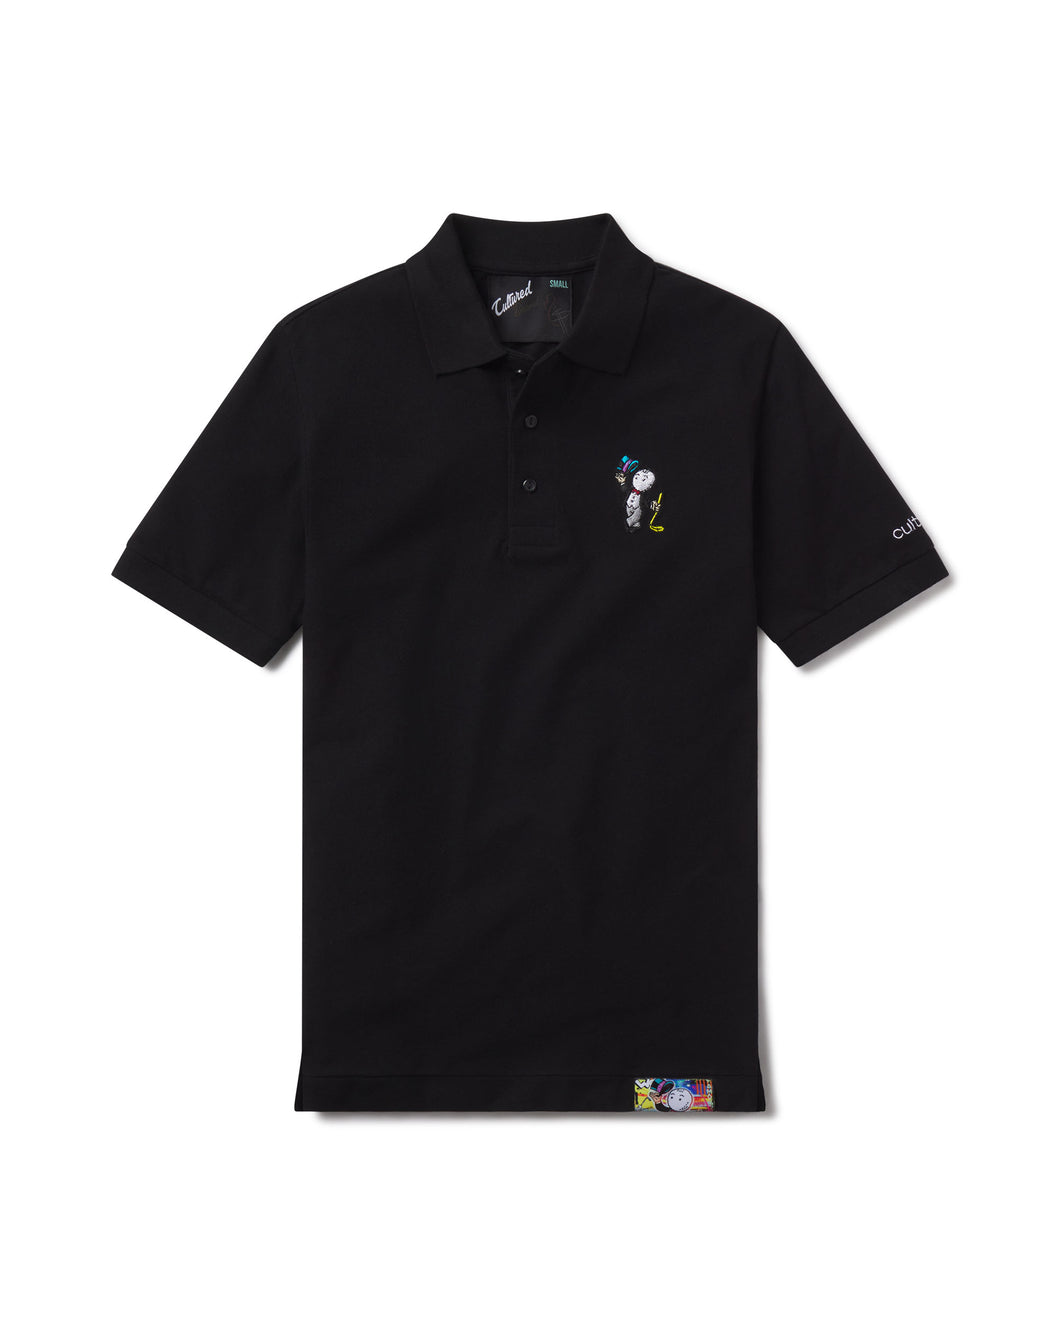 Cultured Golf Shirt Black